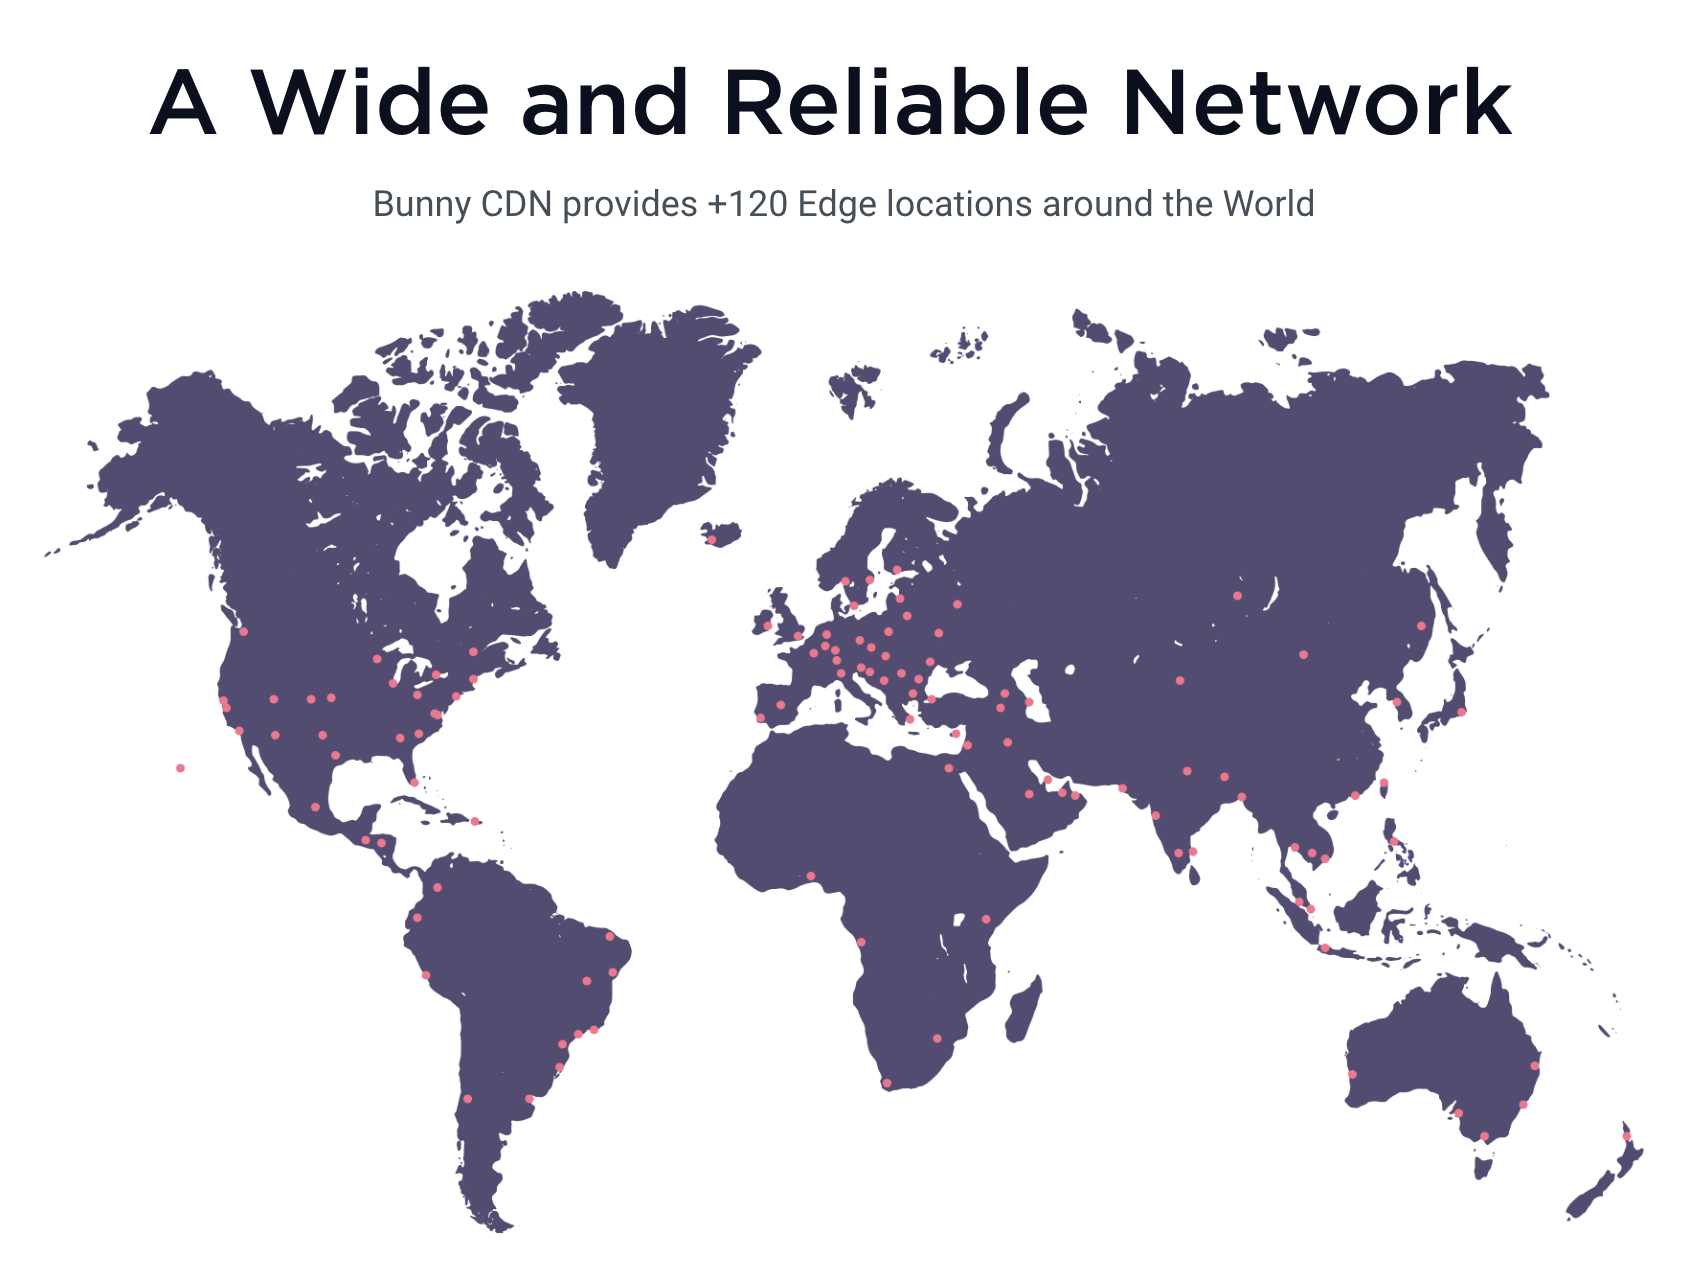 The Bunny CDN network provides +120 Edge locations around the world.